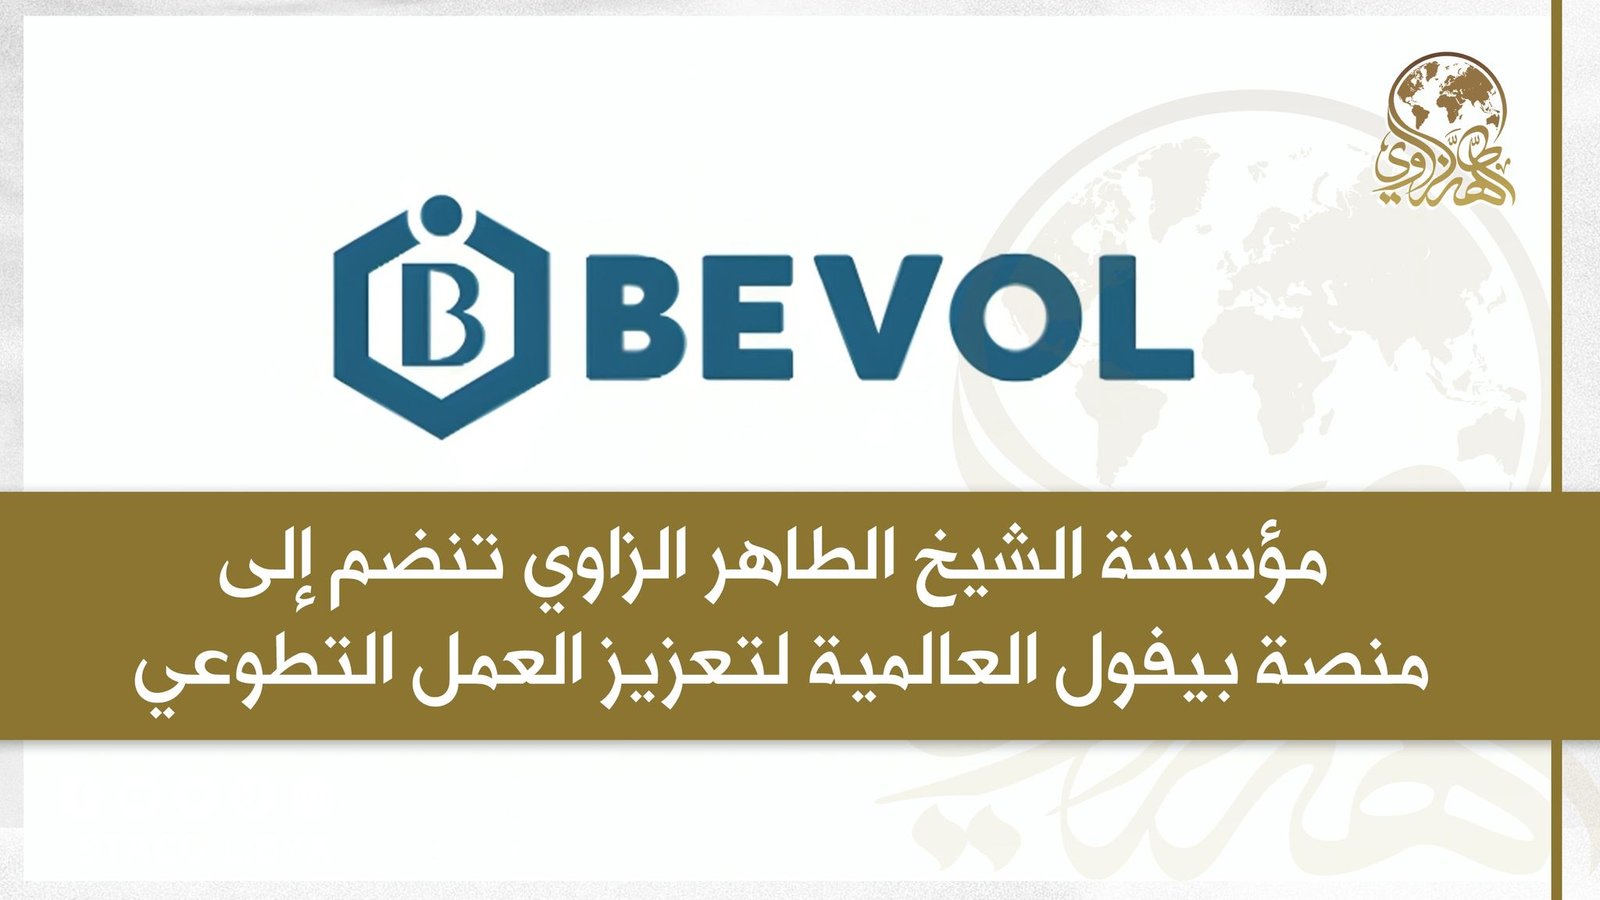 The Sheikh Tahir Al-Zzawi organization joins the Bevol global platform to promote volunteer work